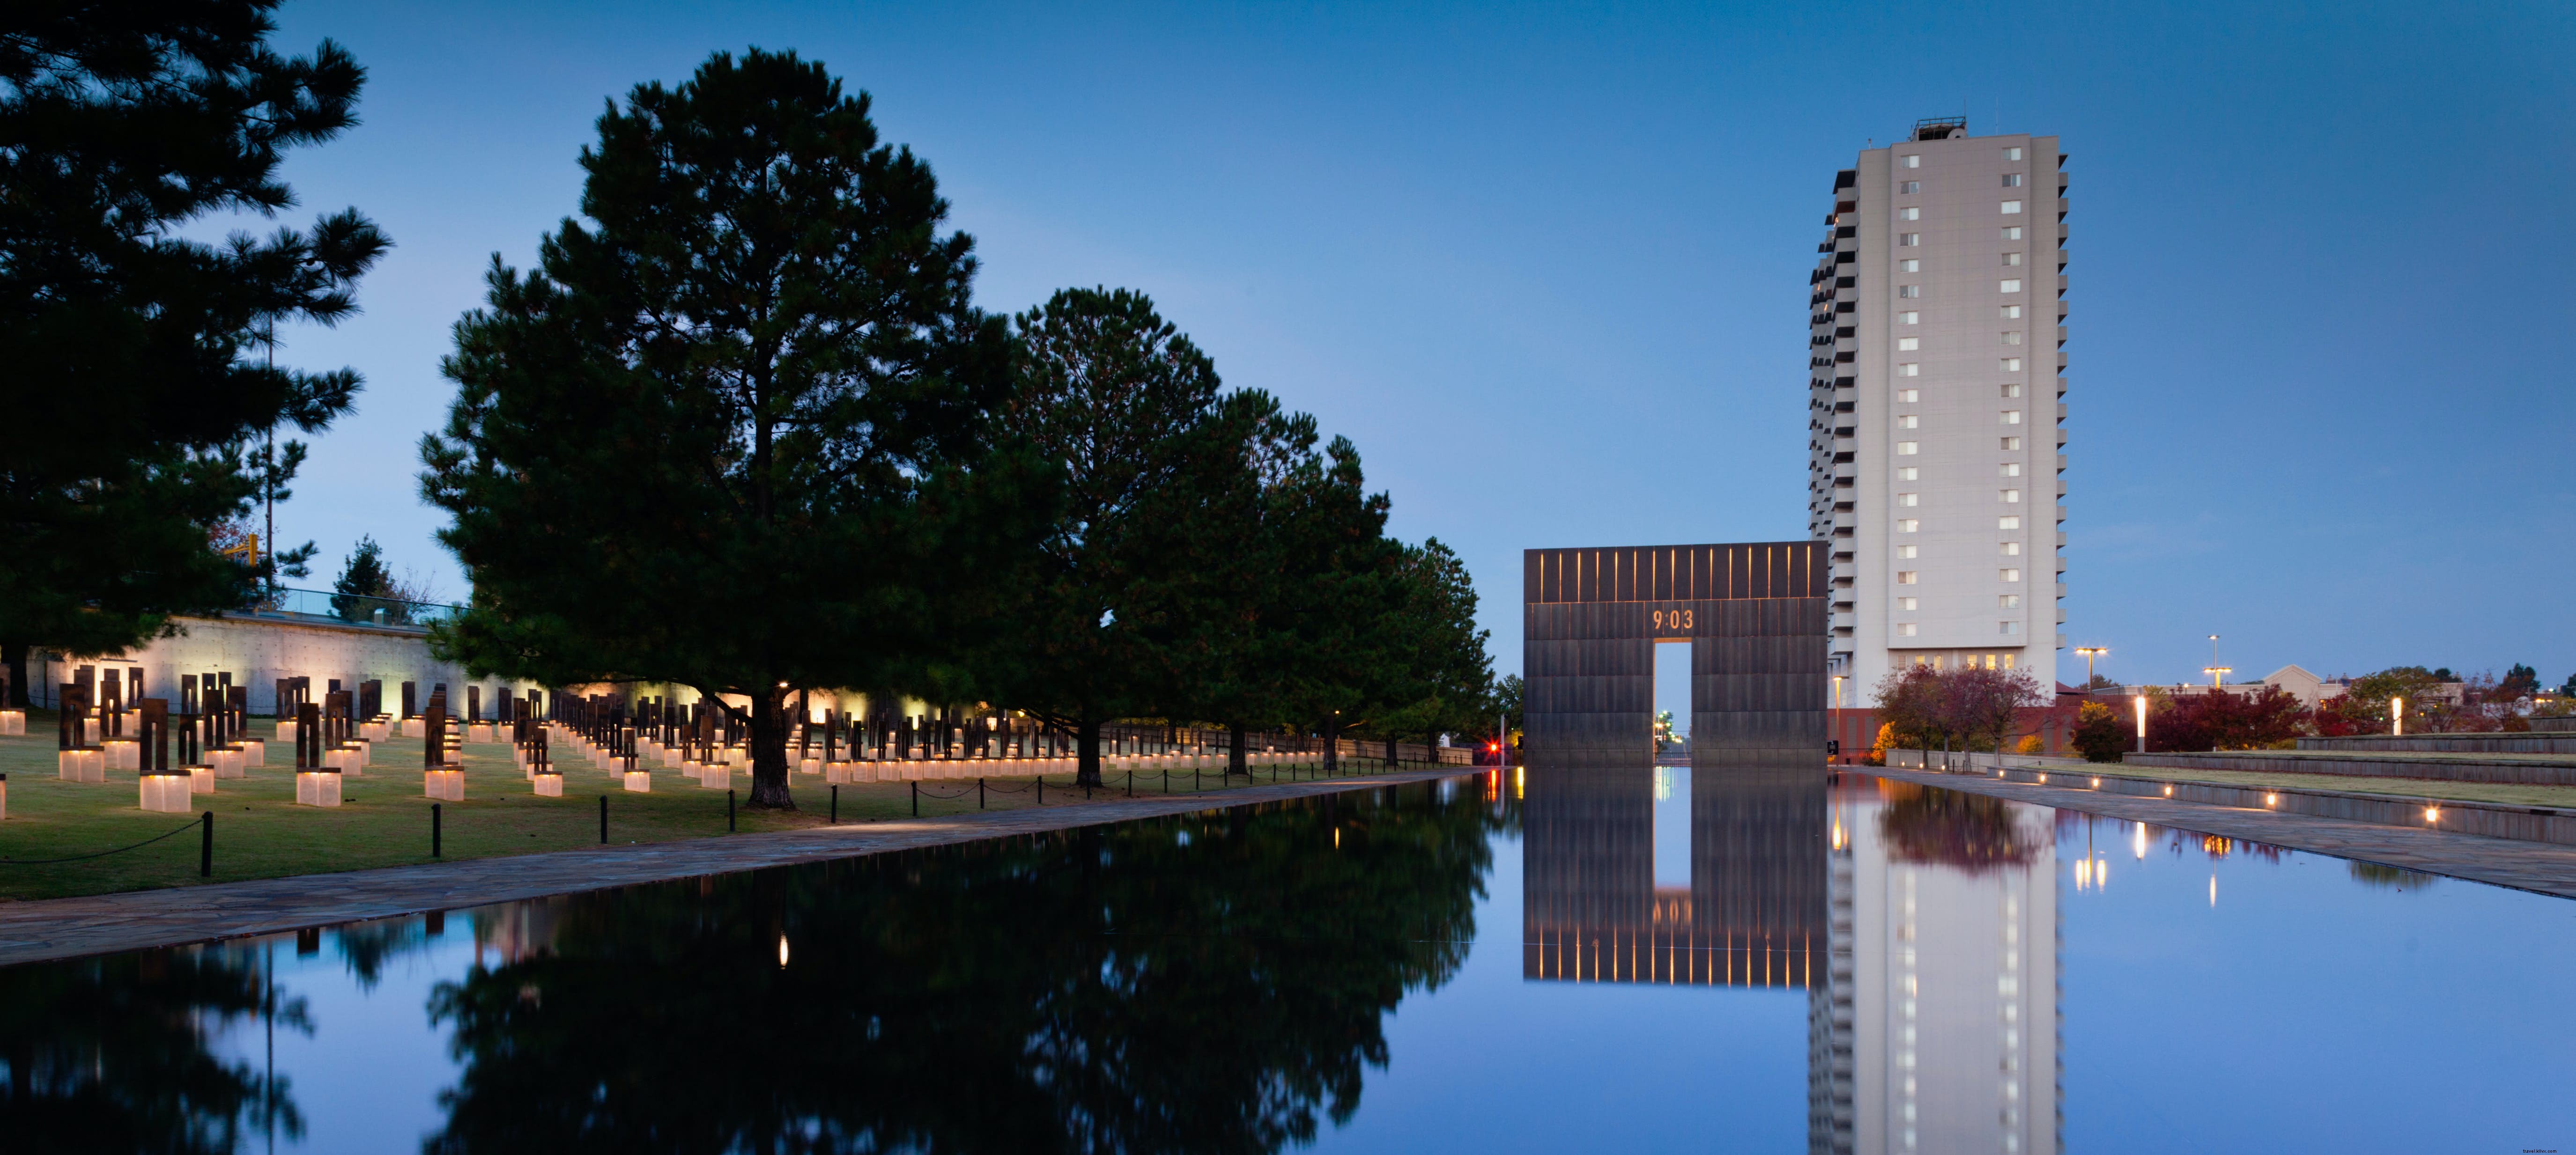 Musée commémoratif national d Oklahoma City 